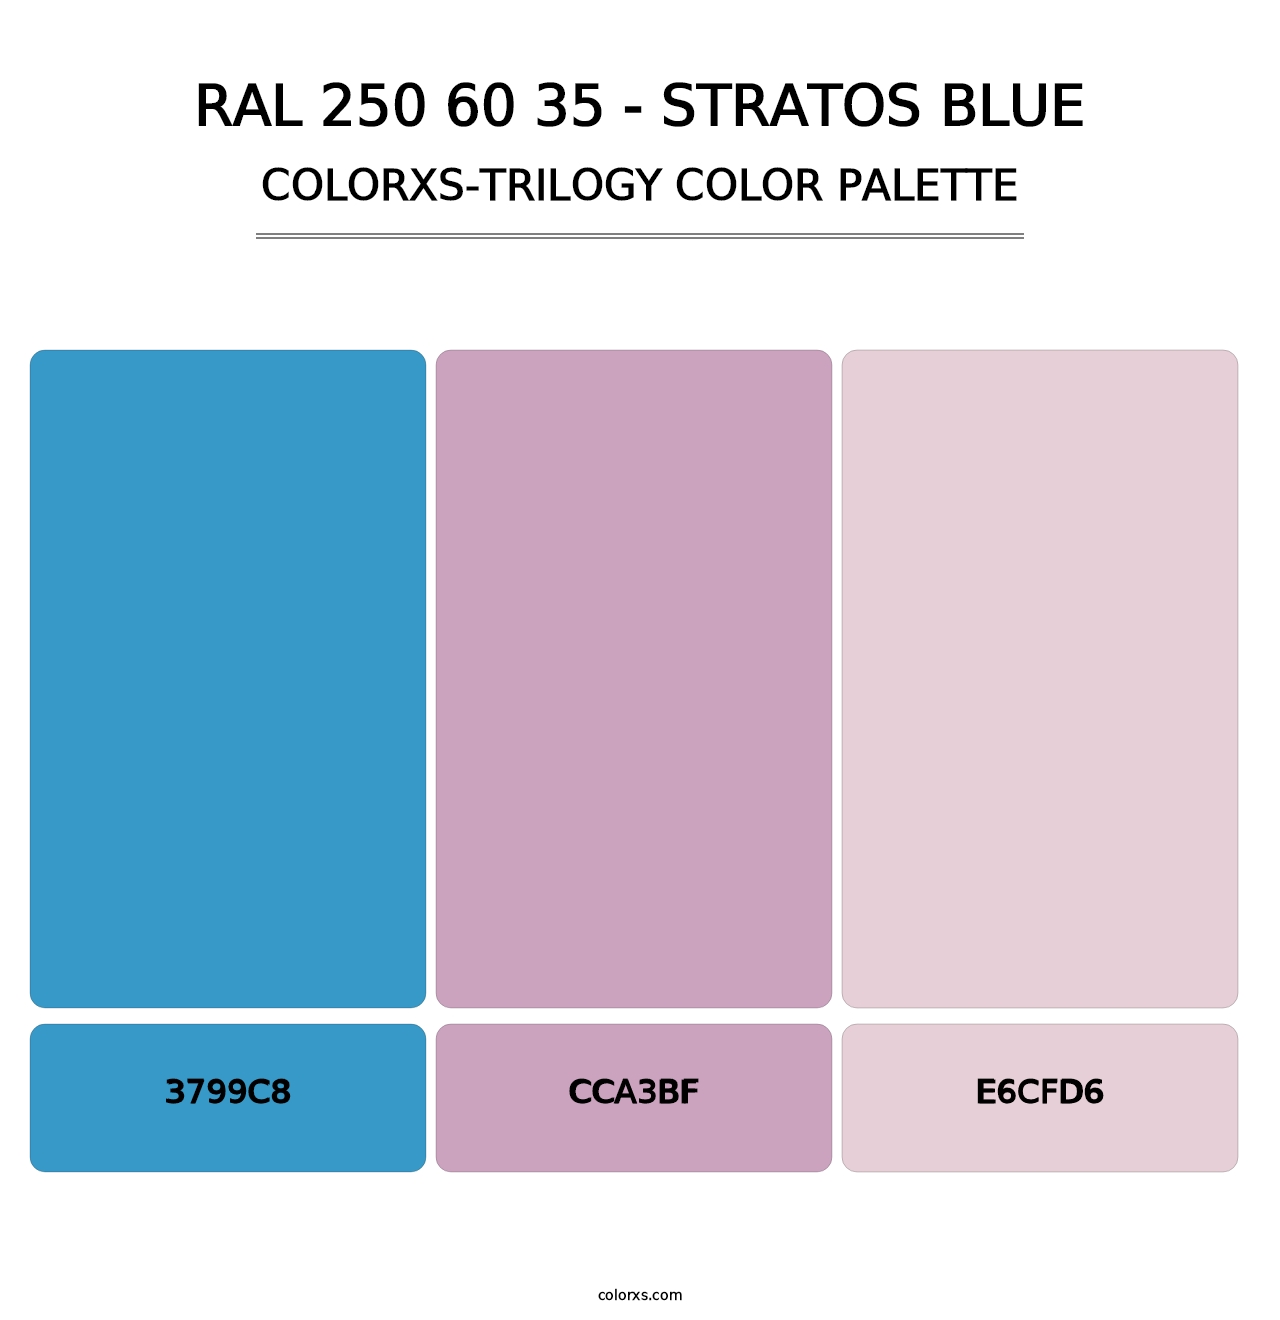 RAL 250 60 35 - Stratos Blue - Colorxs Trilogy Palette